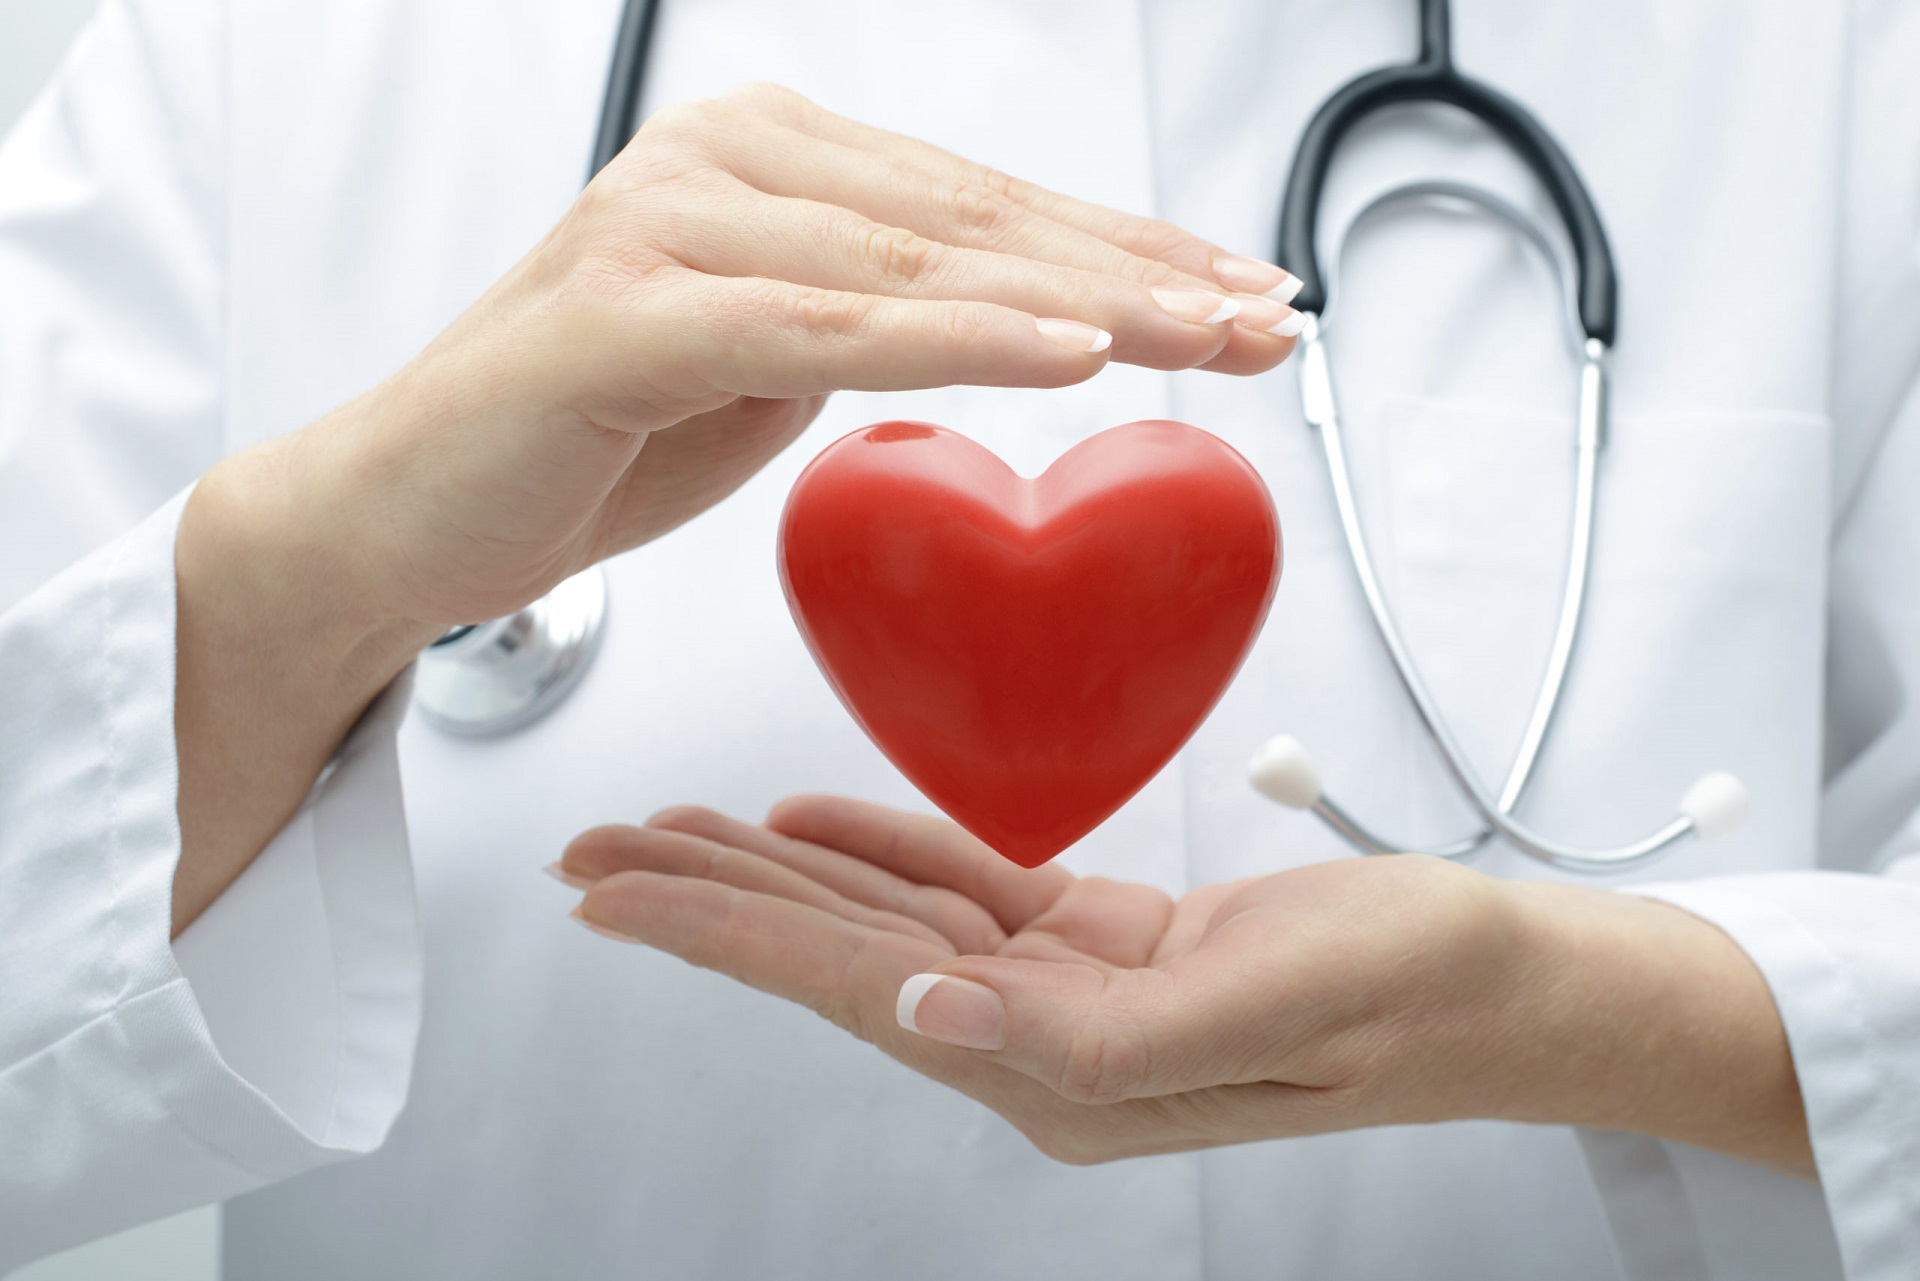 Little Known Risk Factors of Heart Disease